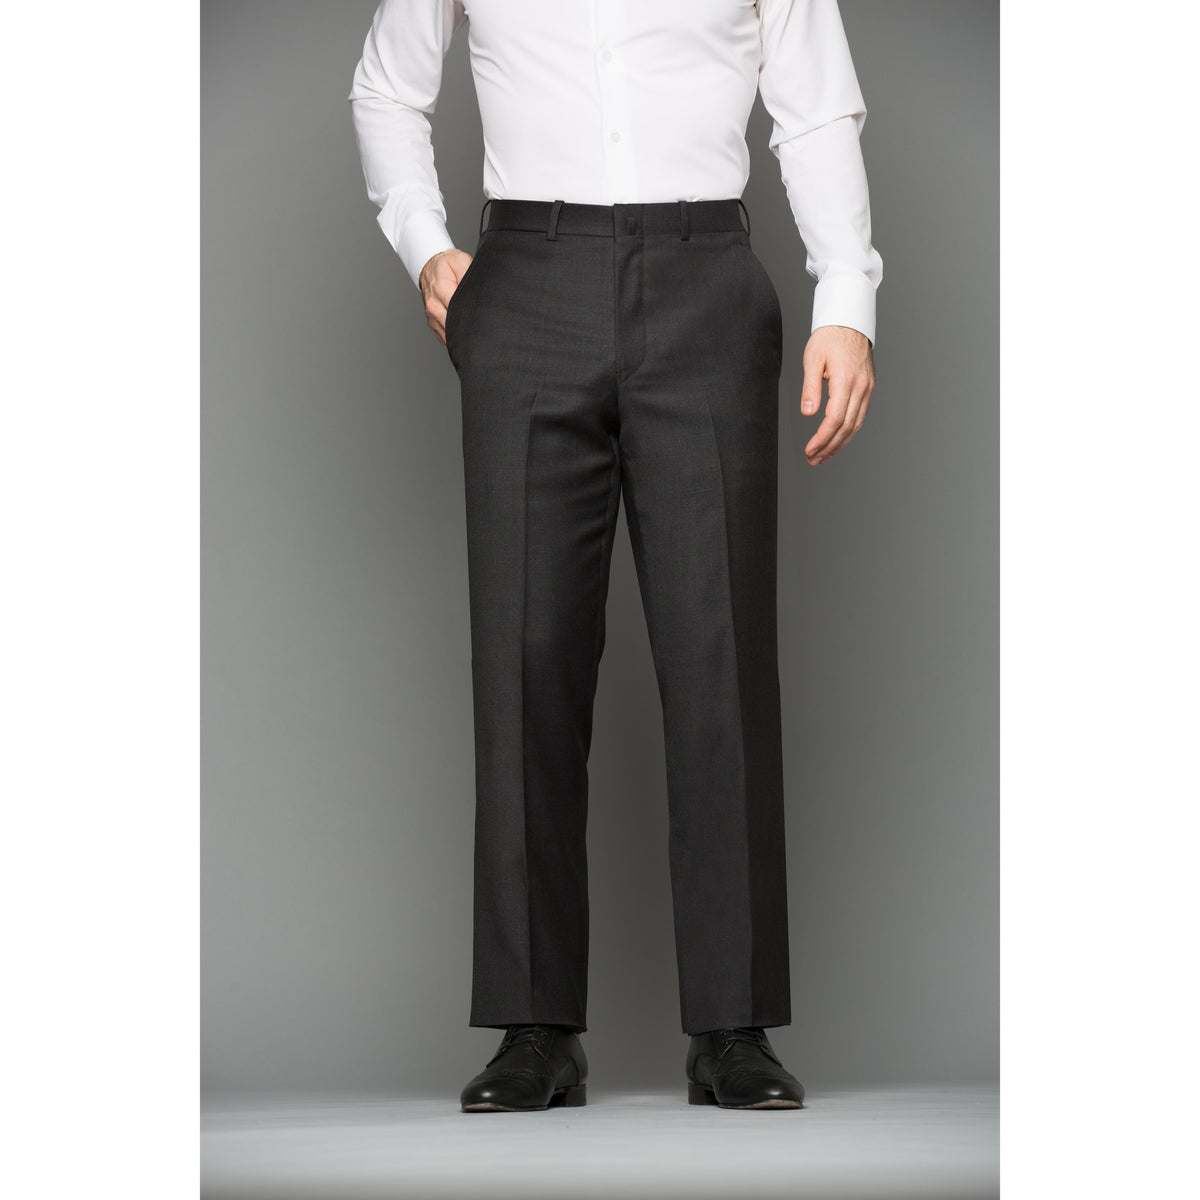 Slim Fit trousers - Dark grey marl - Men | H&M SG